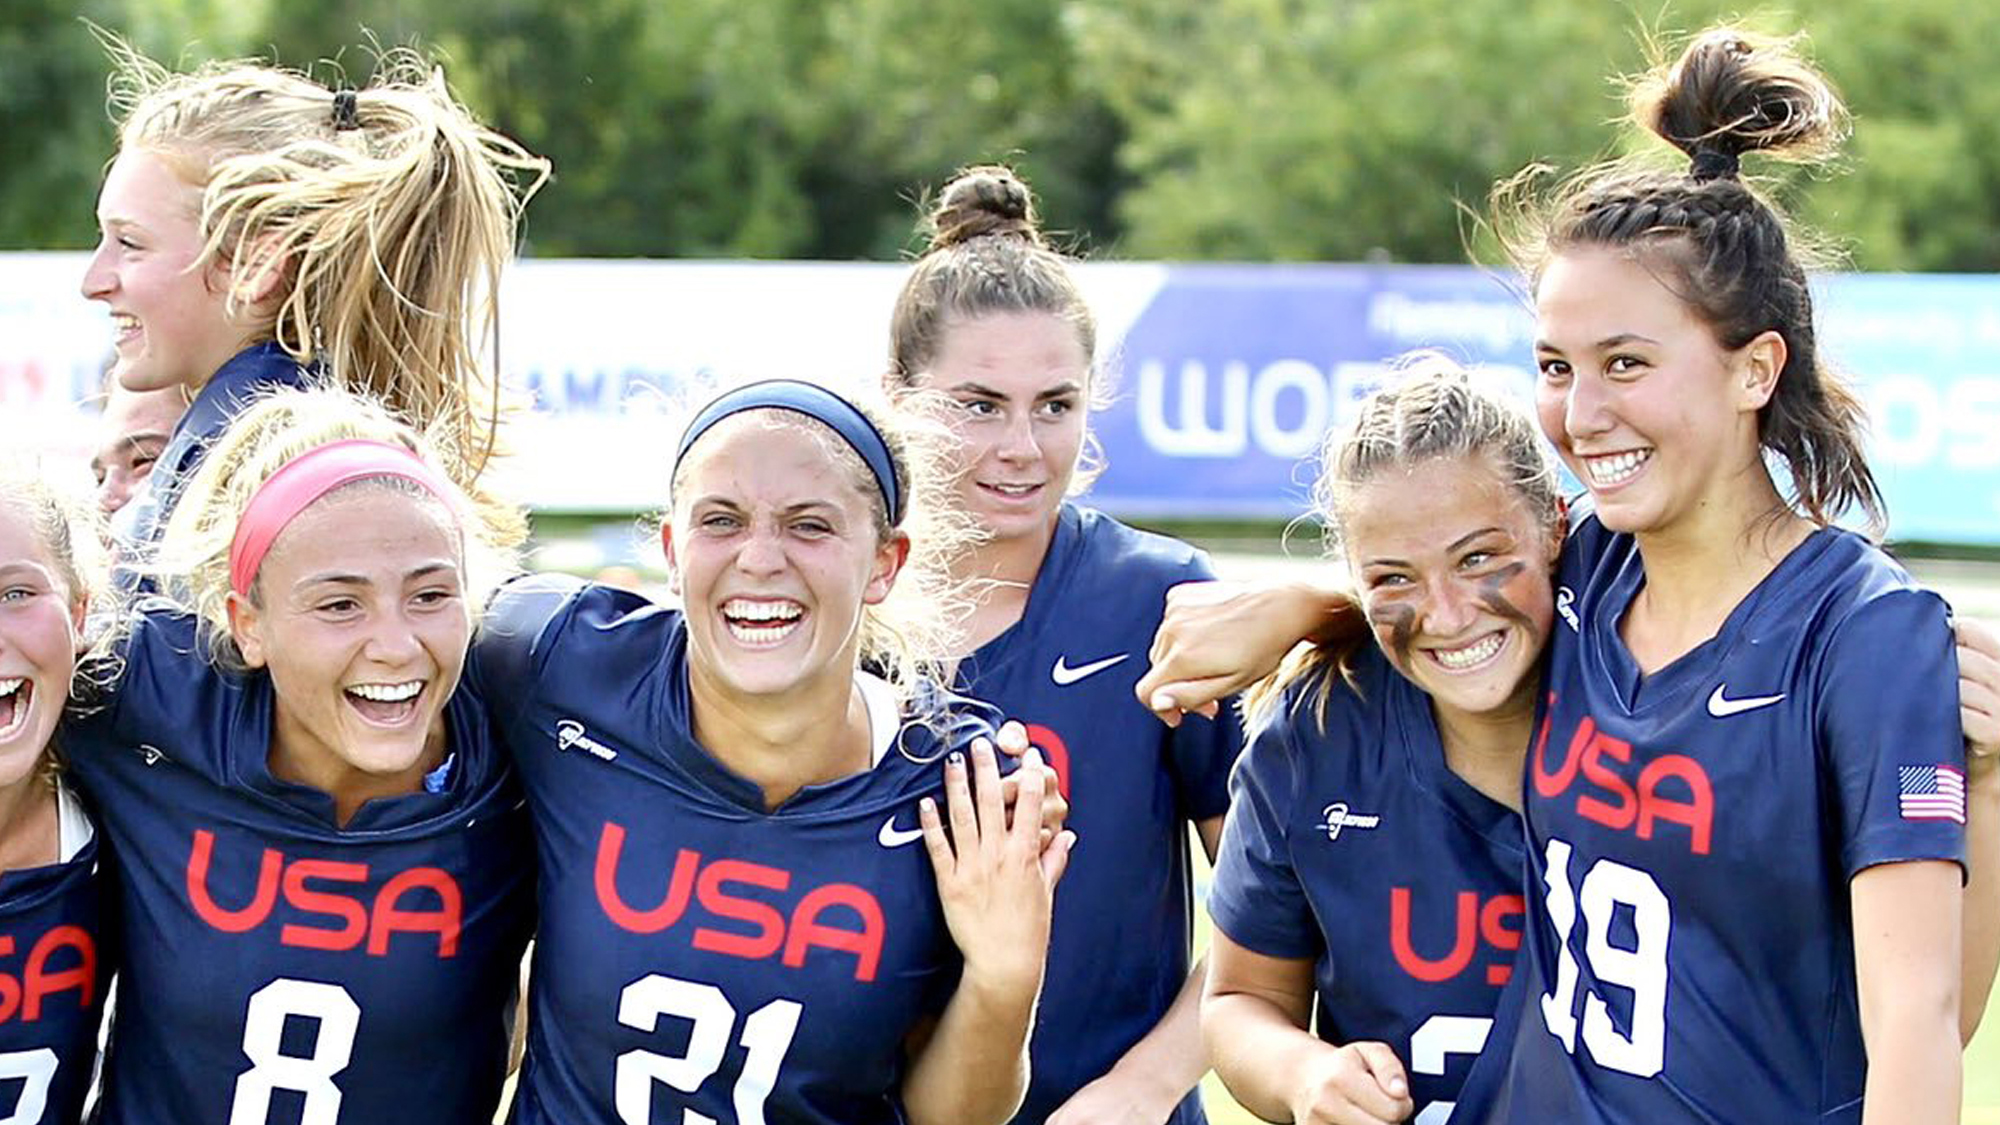 Michaela McMahon, far right, celebrates with members of the Team USA U19 squad.